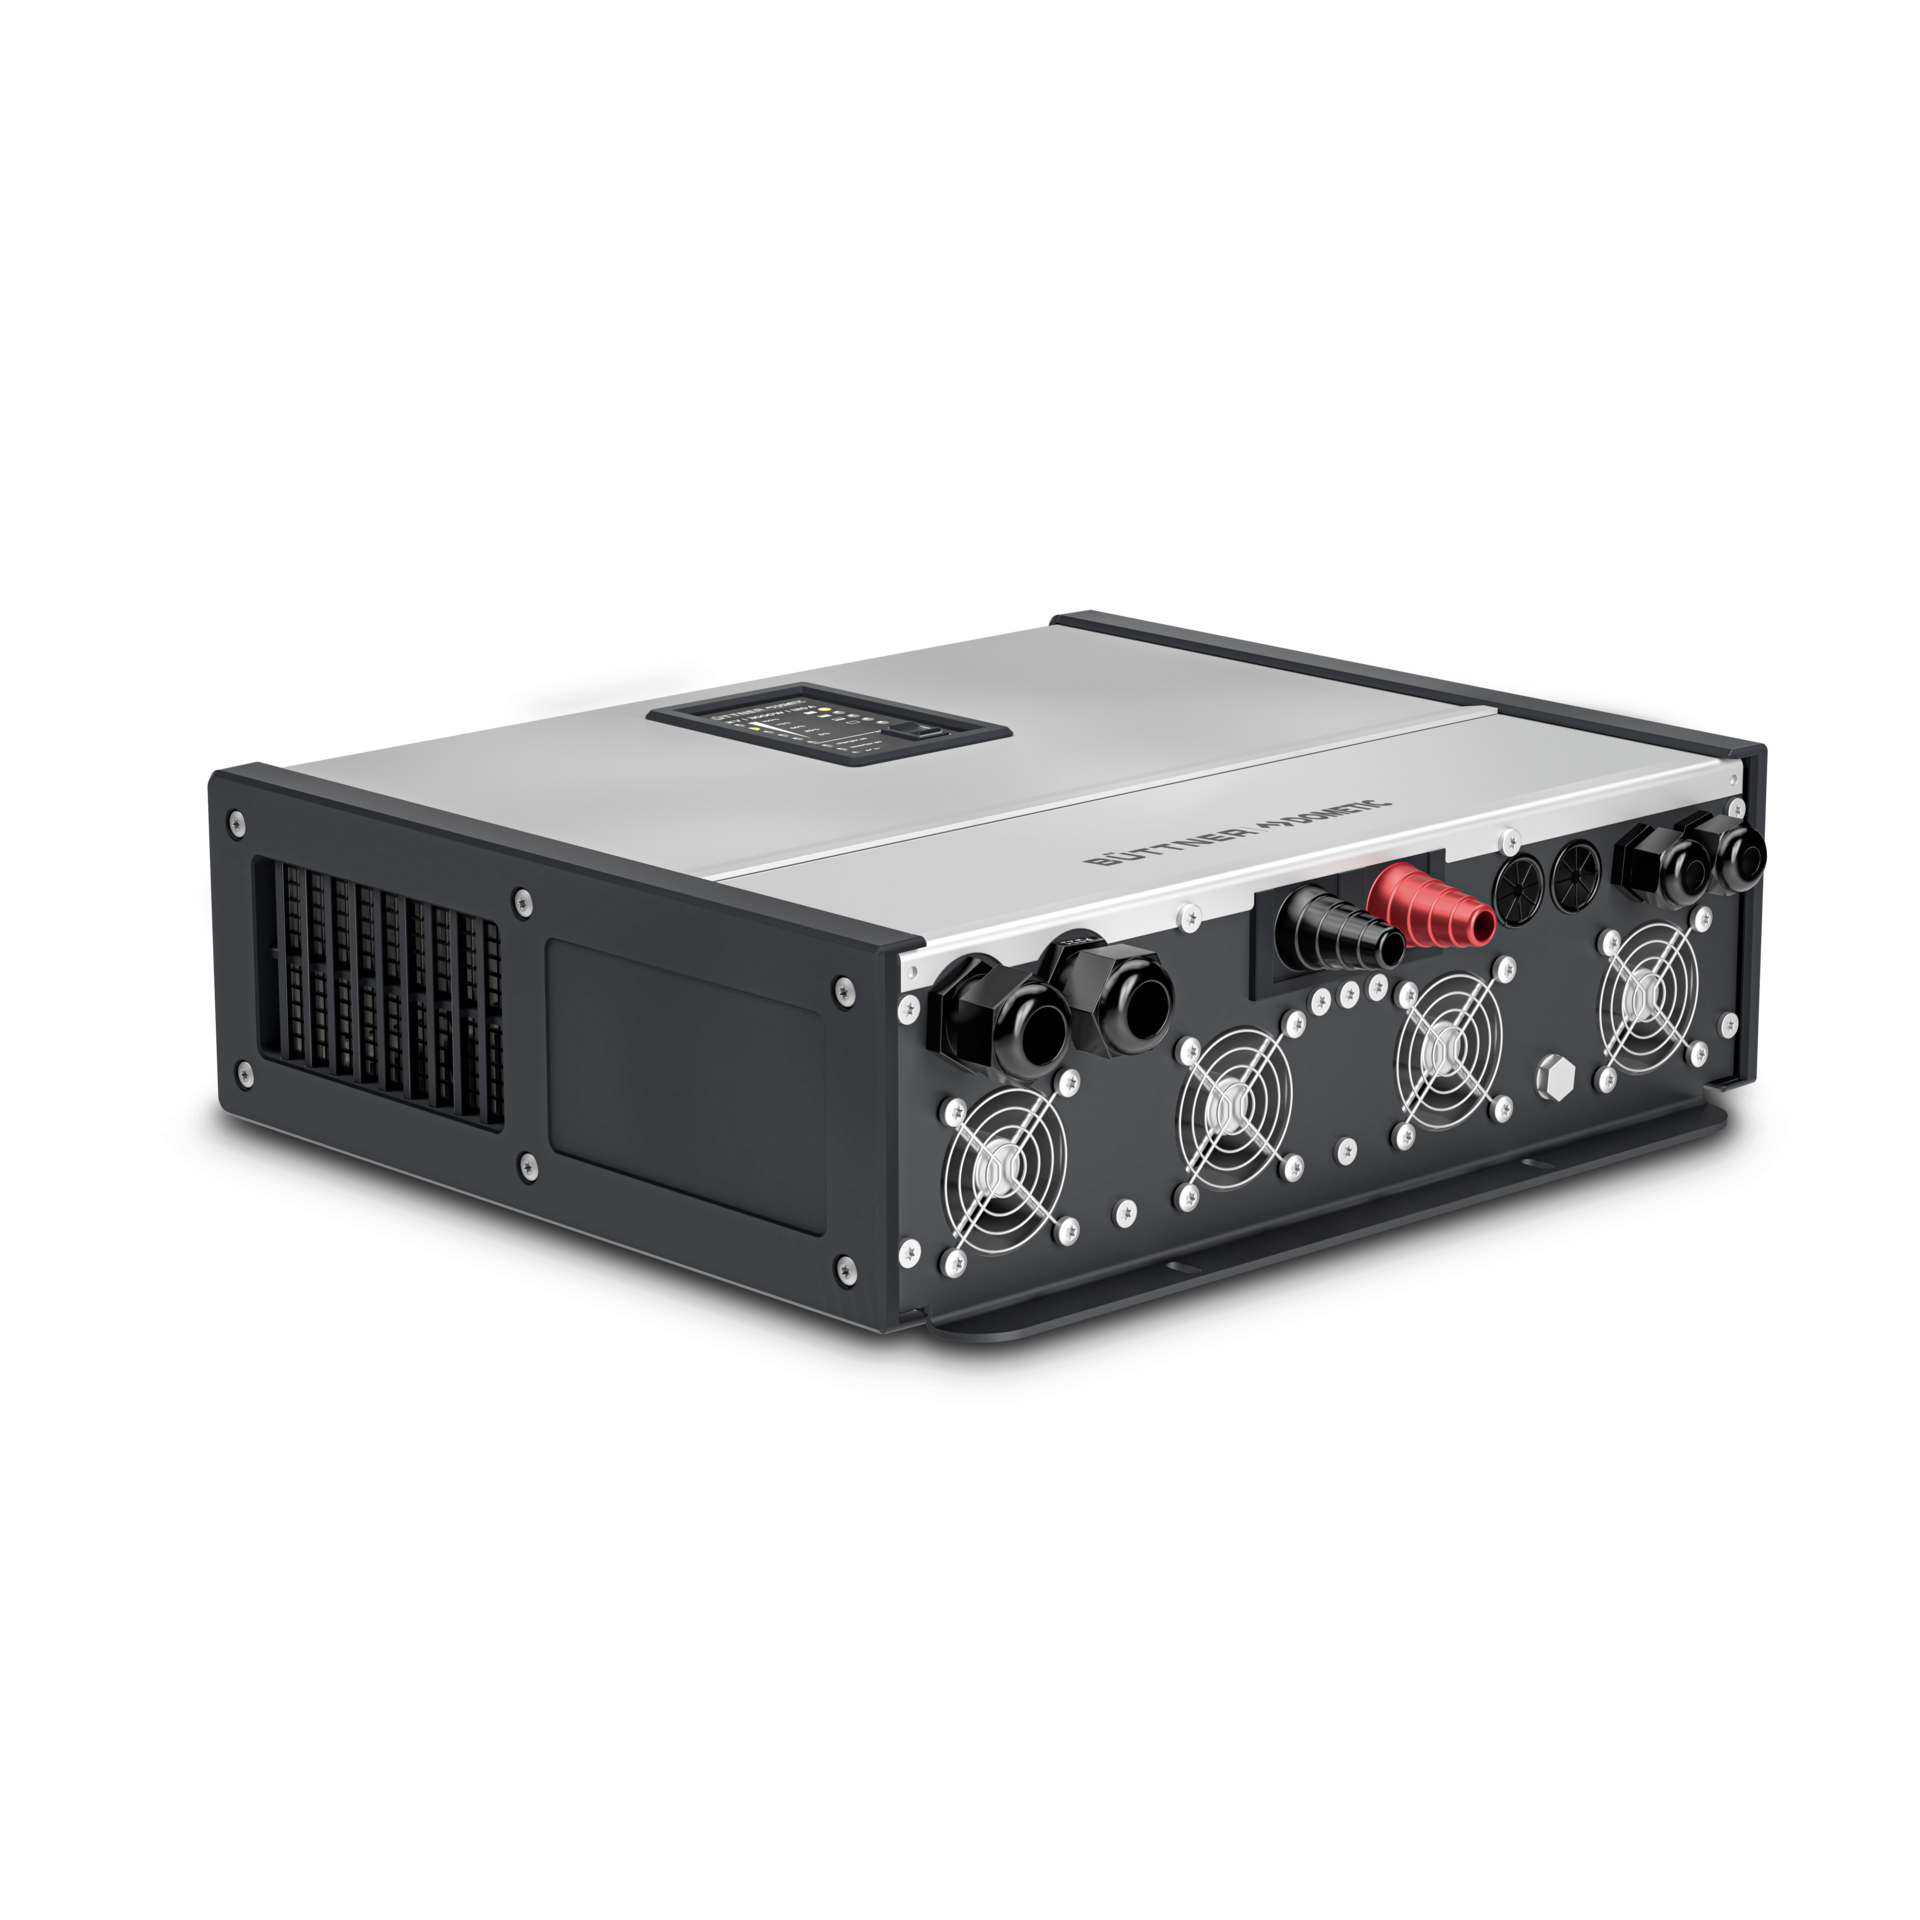 SMART-IN NDS Dometic Wechselrichter 400W 12V 230Vac reine Welle Wohnmobil  Kabine